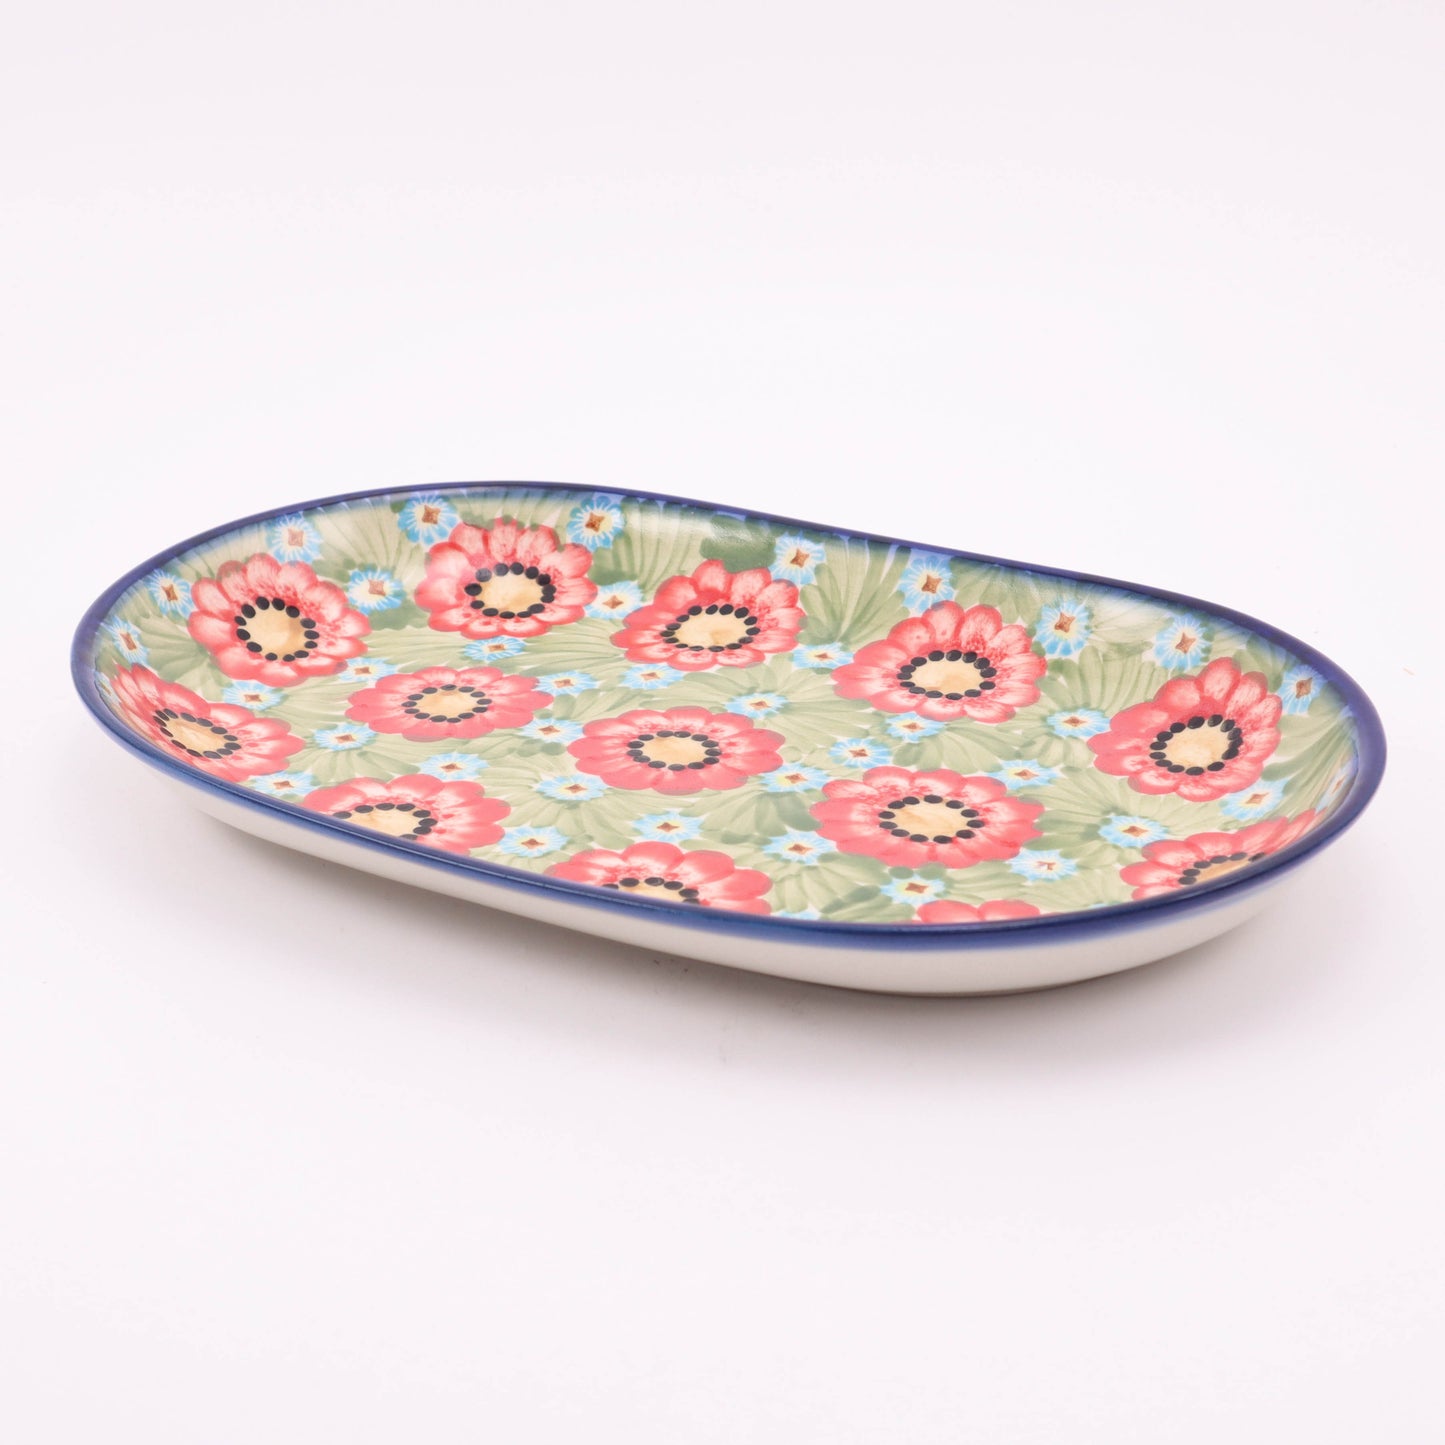 8.5"x13" Oval Serving Dish. Pattern: Flower Power